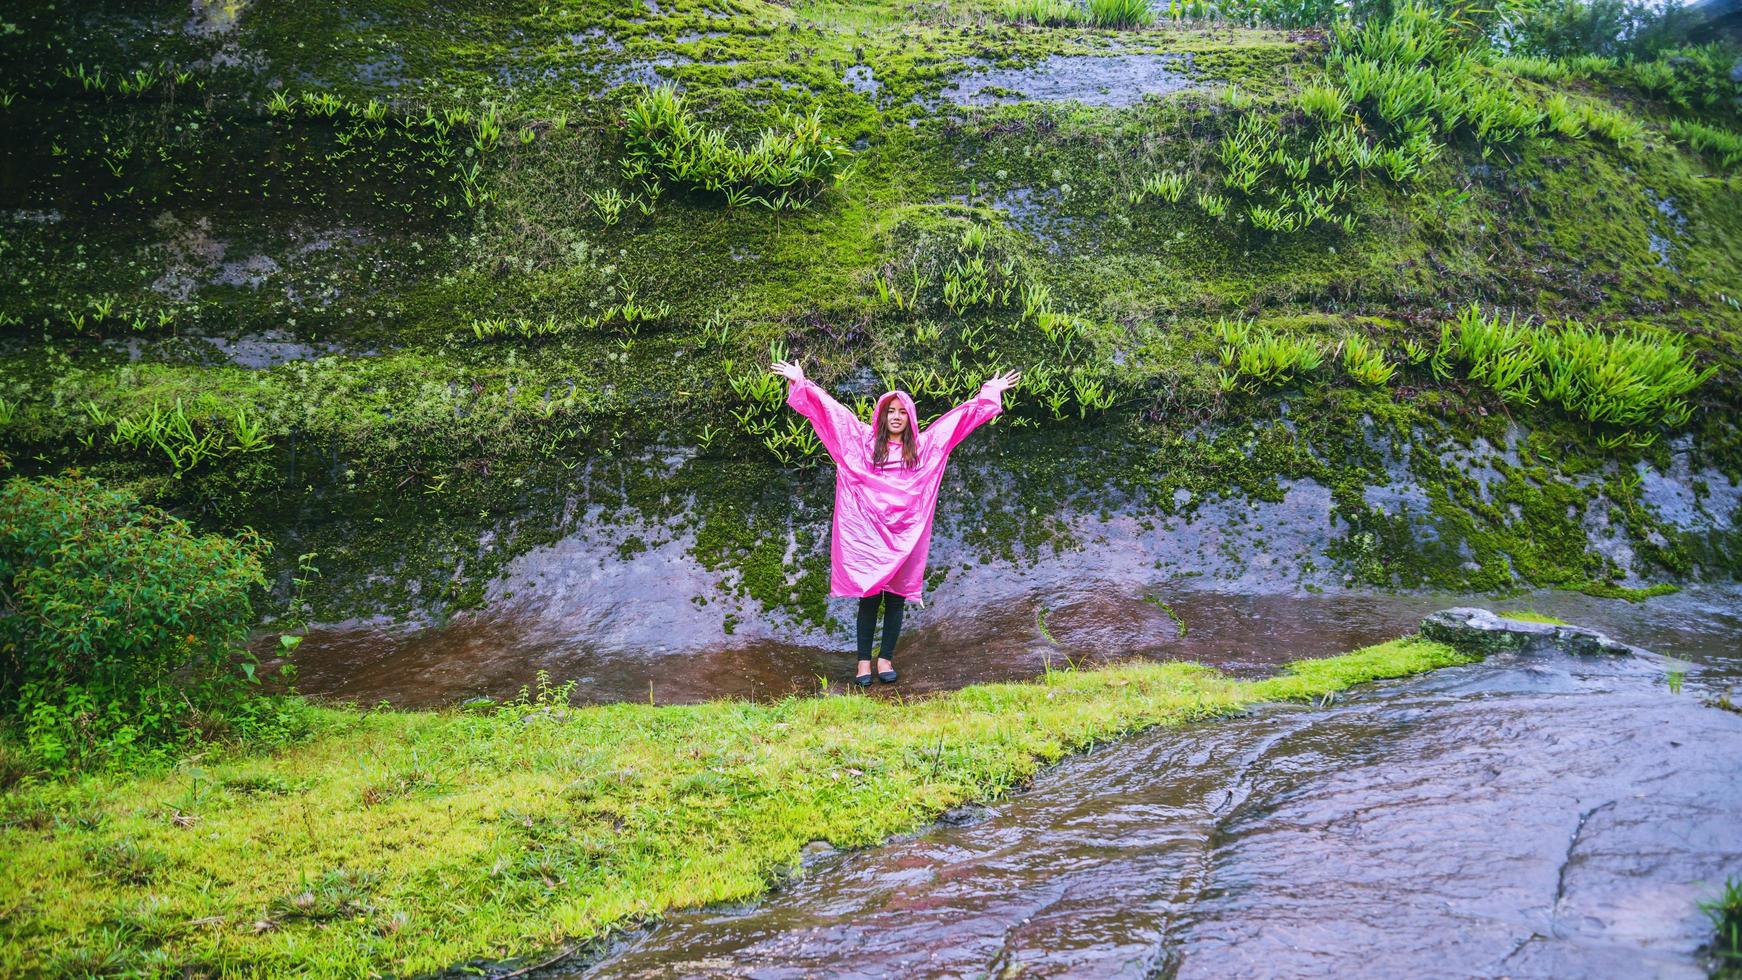 toerist met roze regenjas wandelen reizen avontuur natuur in het regenwoud. reizen natuur, reizen ontspannen, reizen thailand, regenseizoen. foto